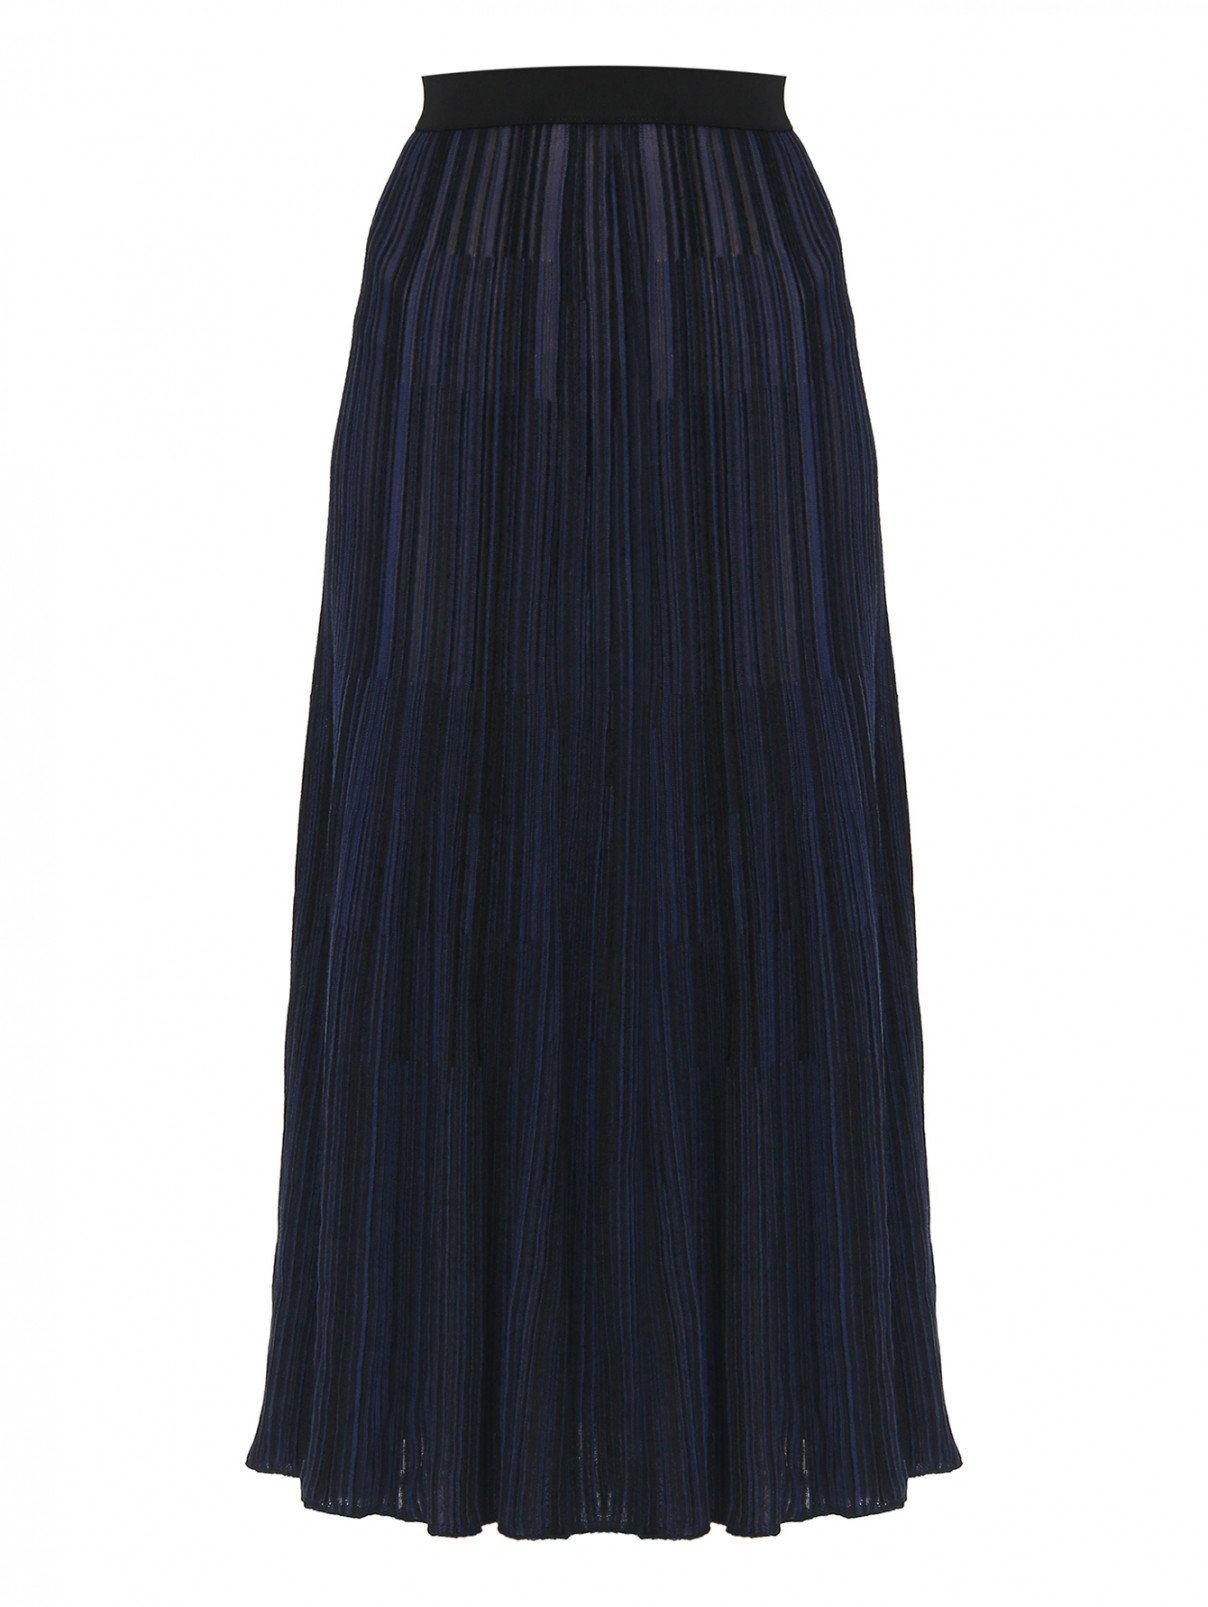 Триотажная юбка в рубчик Sonia Rykiel  –  Общий вид  – Цвет:  Синий